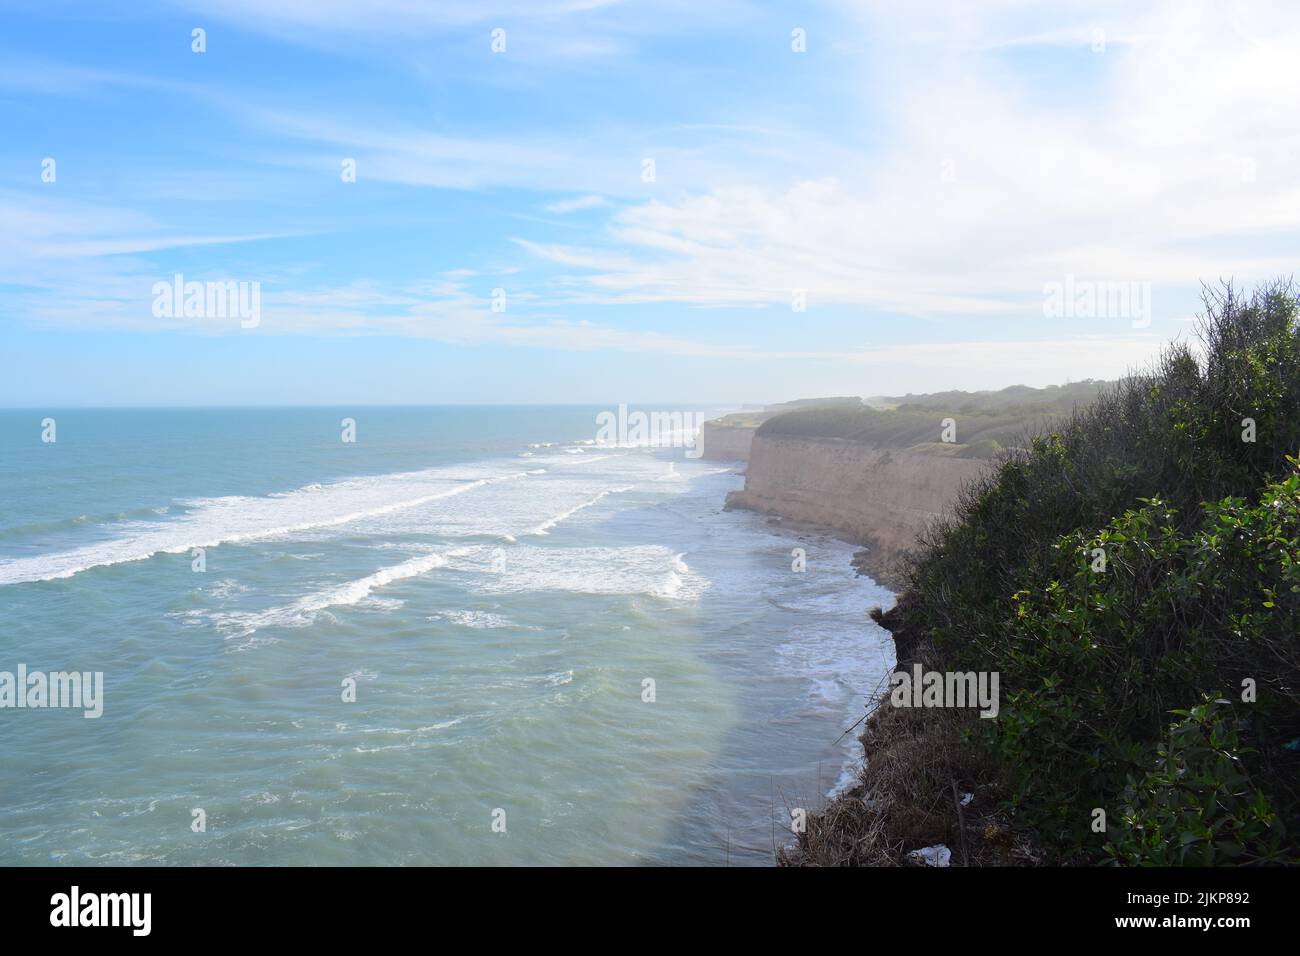 A beautiful shot of wavy sea crashing rocky cliffs under a blue sky on a sunny day Stock Photo